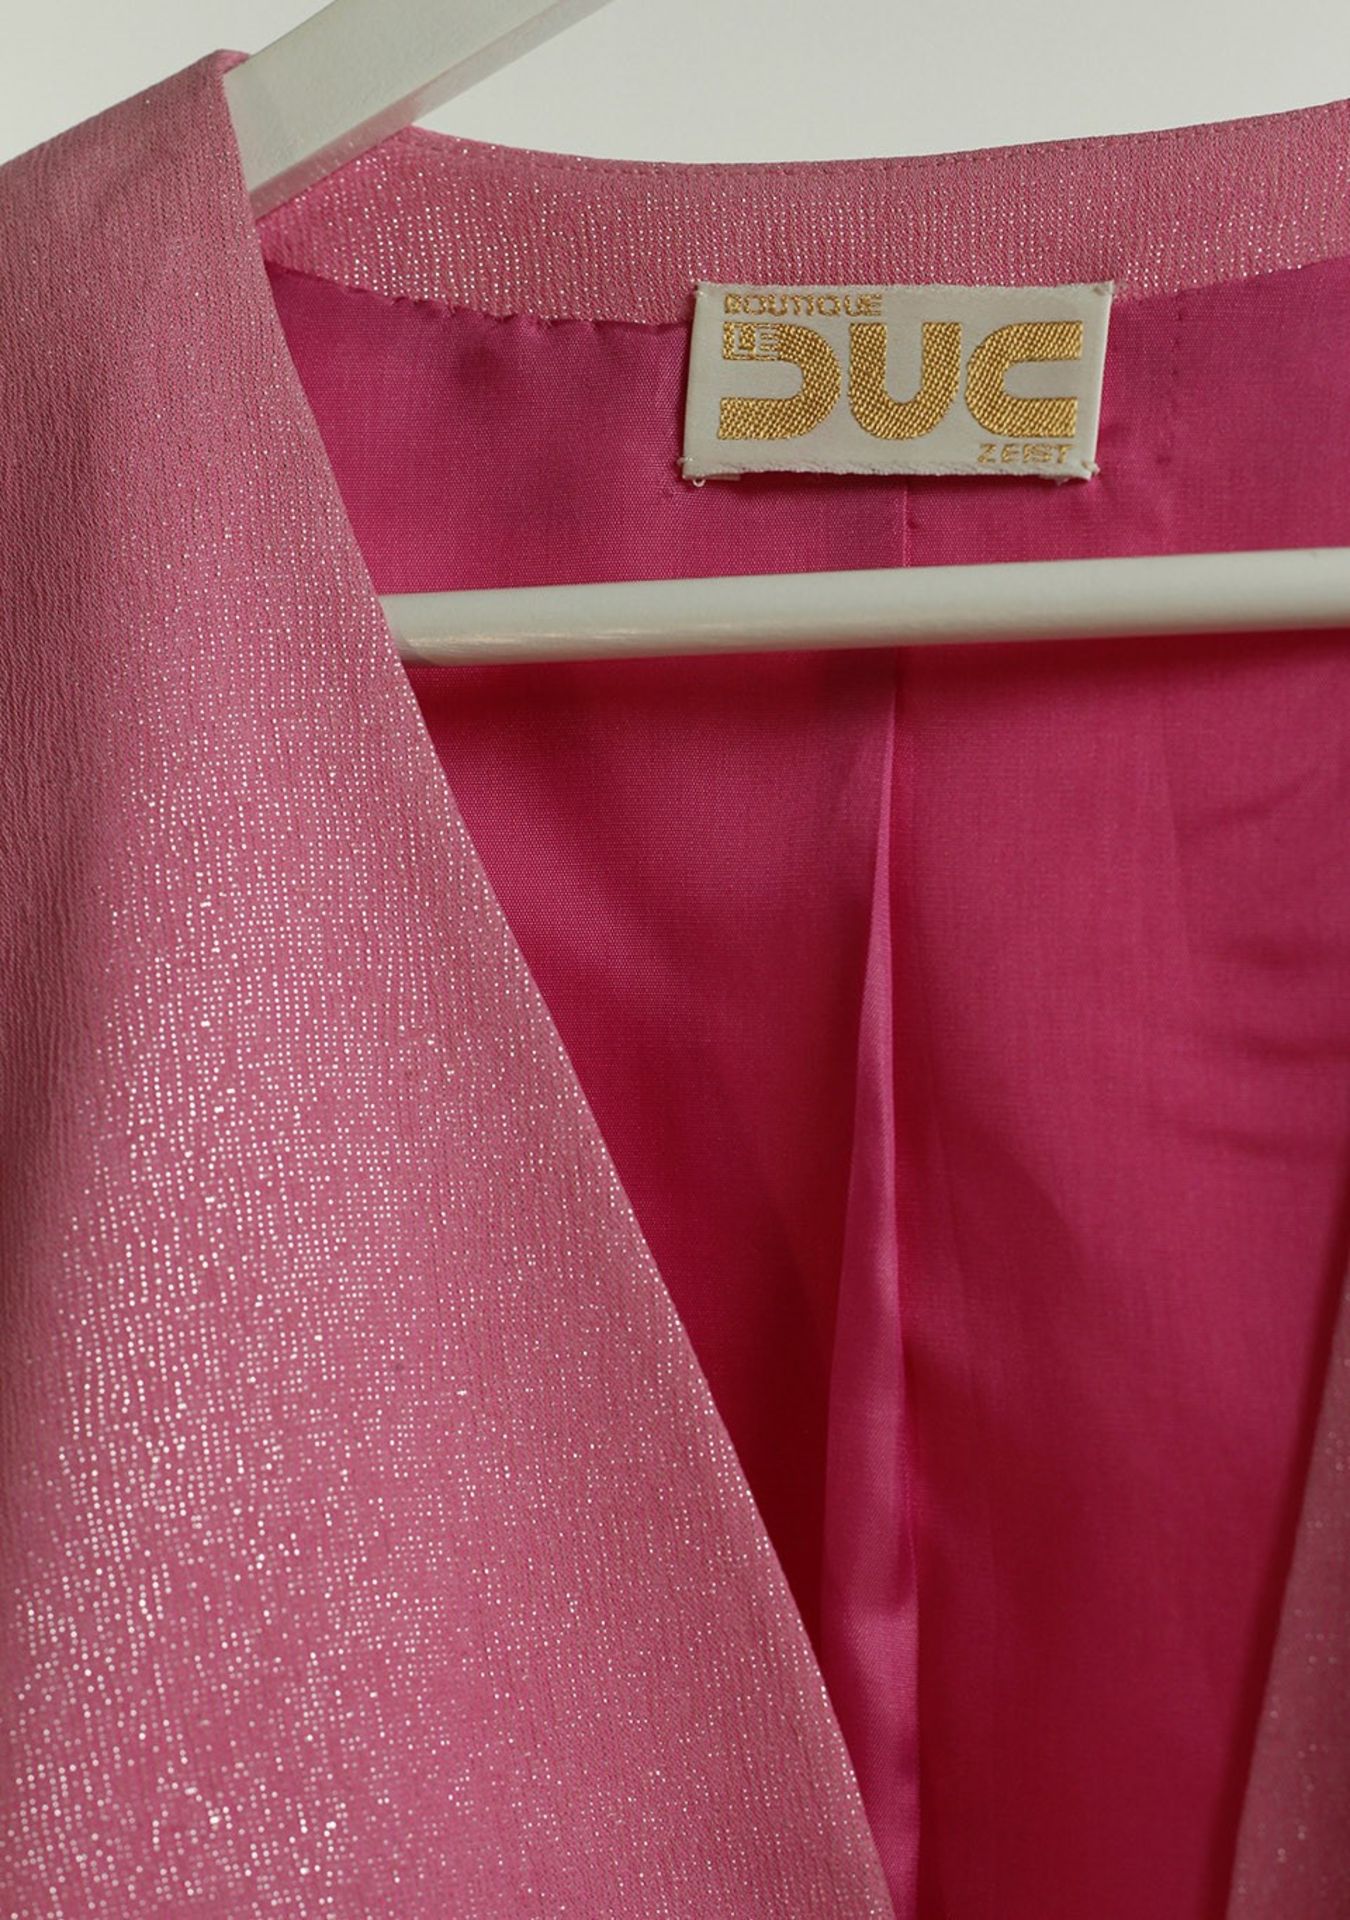 1 x Boutique Le Duc Pink Waistcoat - Size: L - Material: 49% Cotton, 40% Acetate, 11% Poly metal - Image 5 of 7